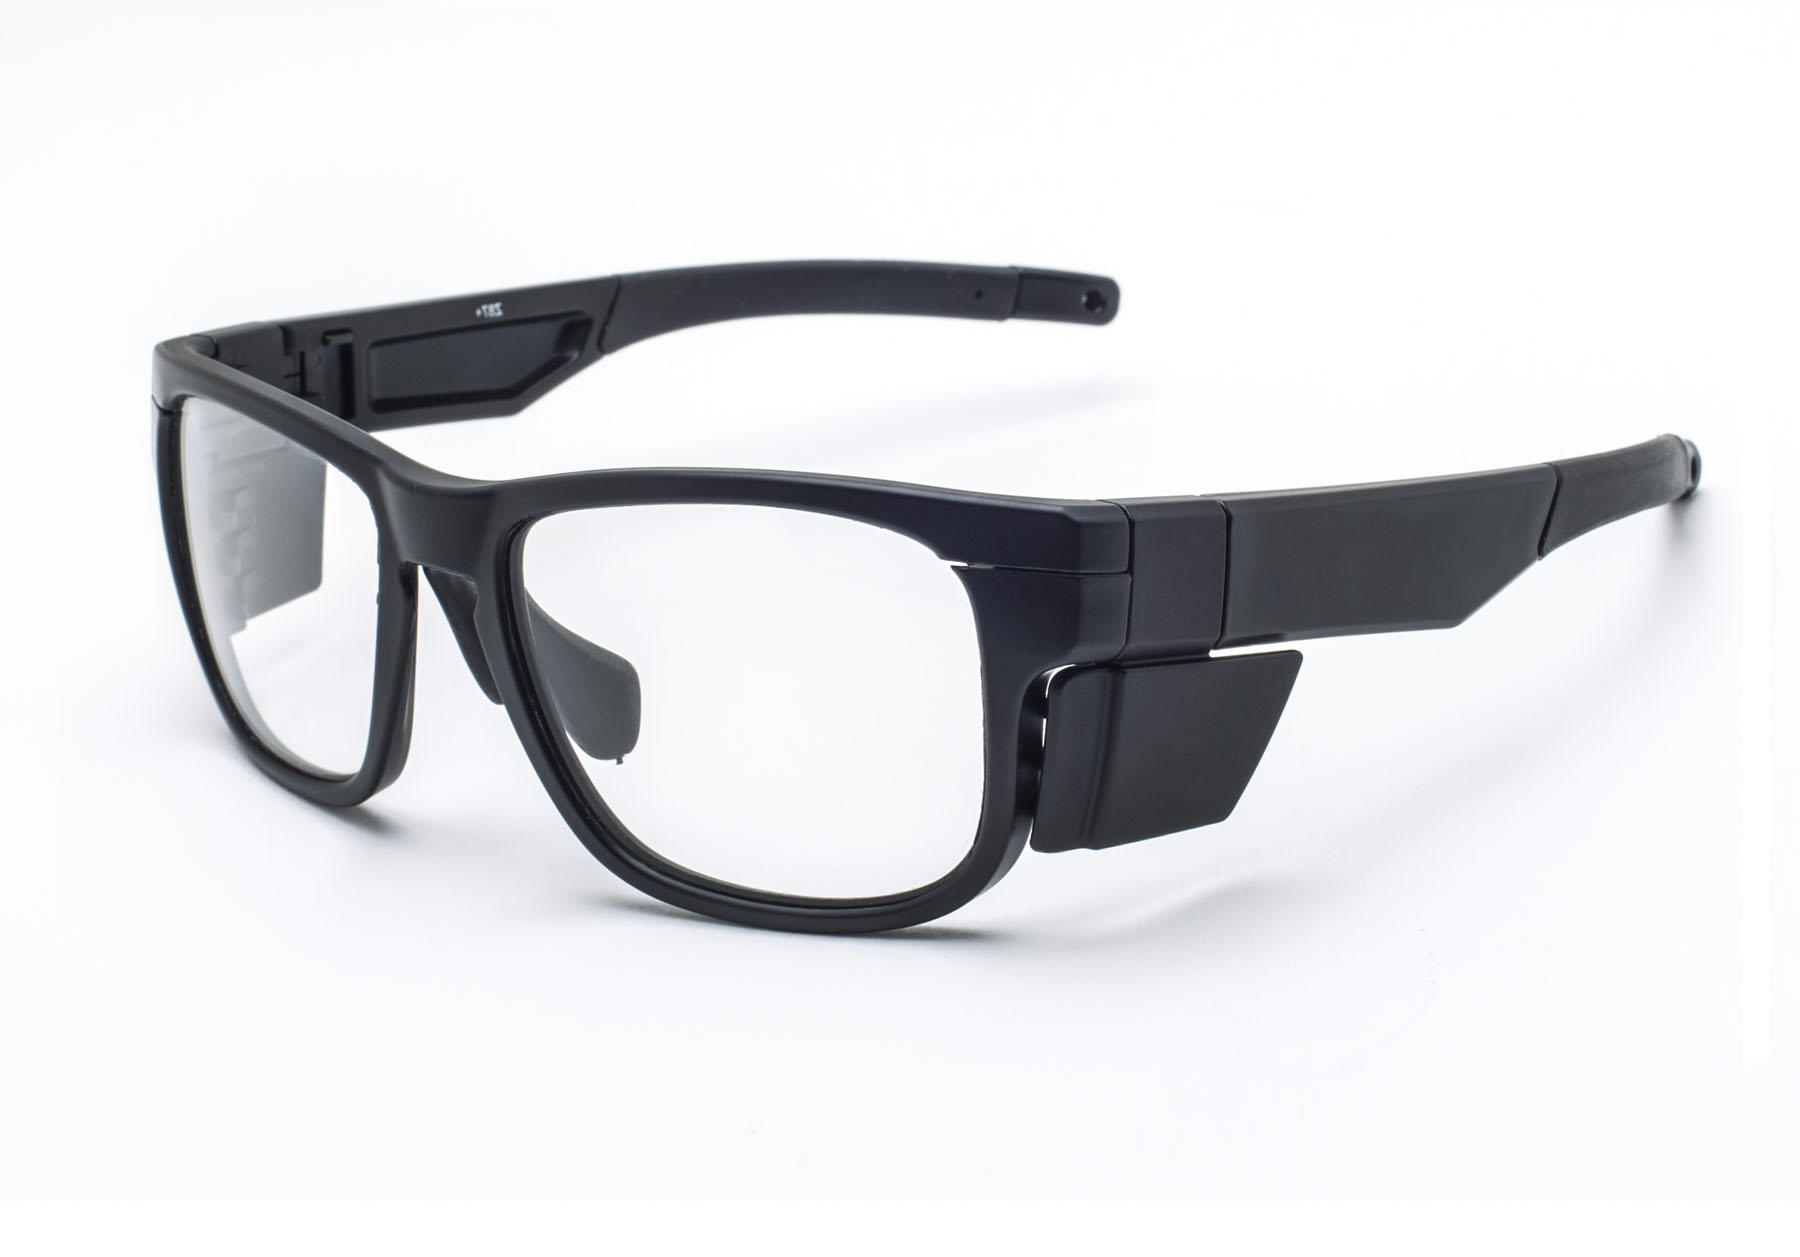 Leaded Glasses Radiation Safety Eyewear Model Psr-500